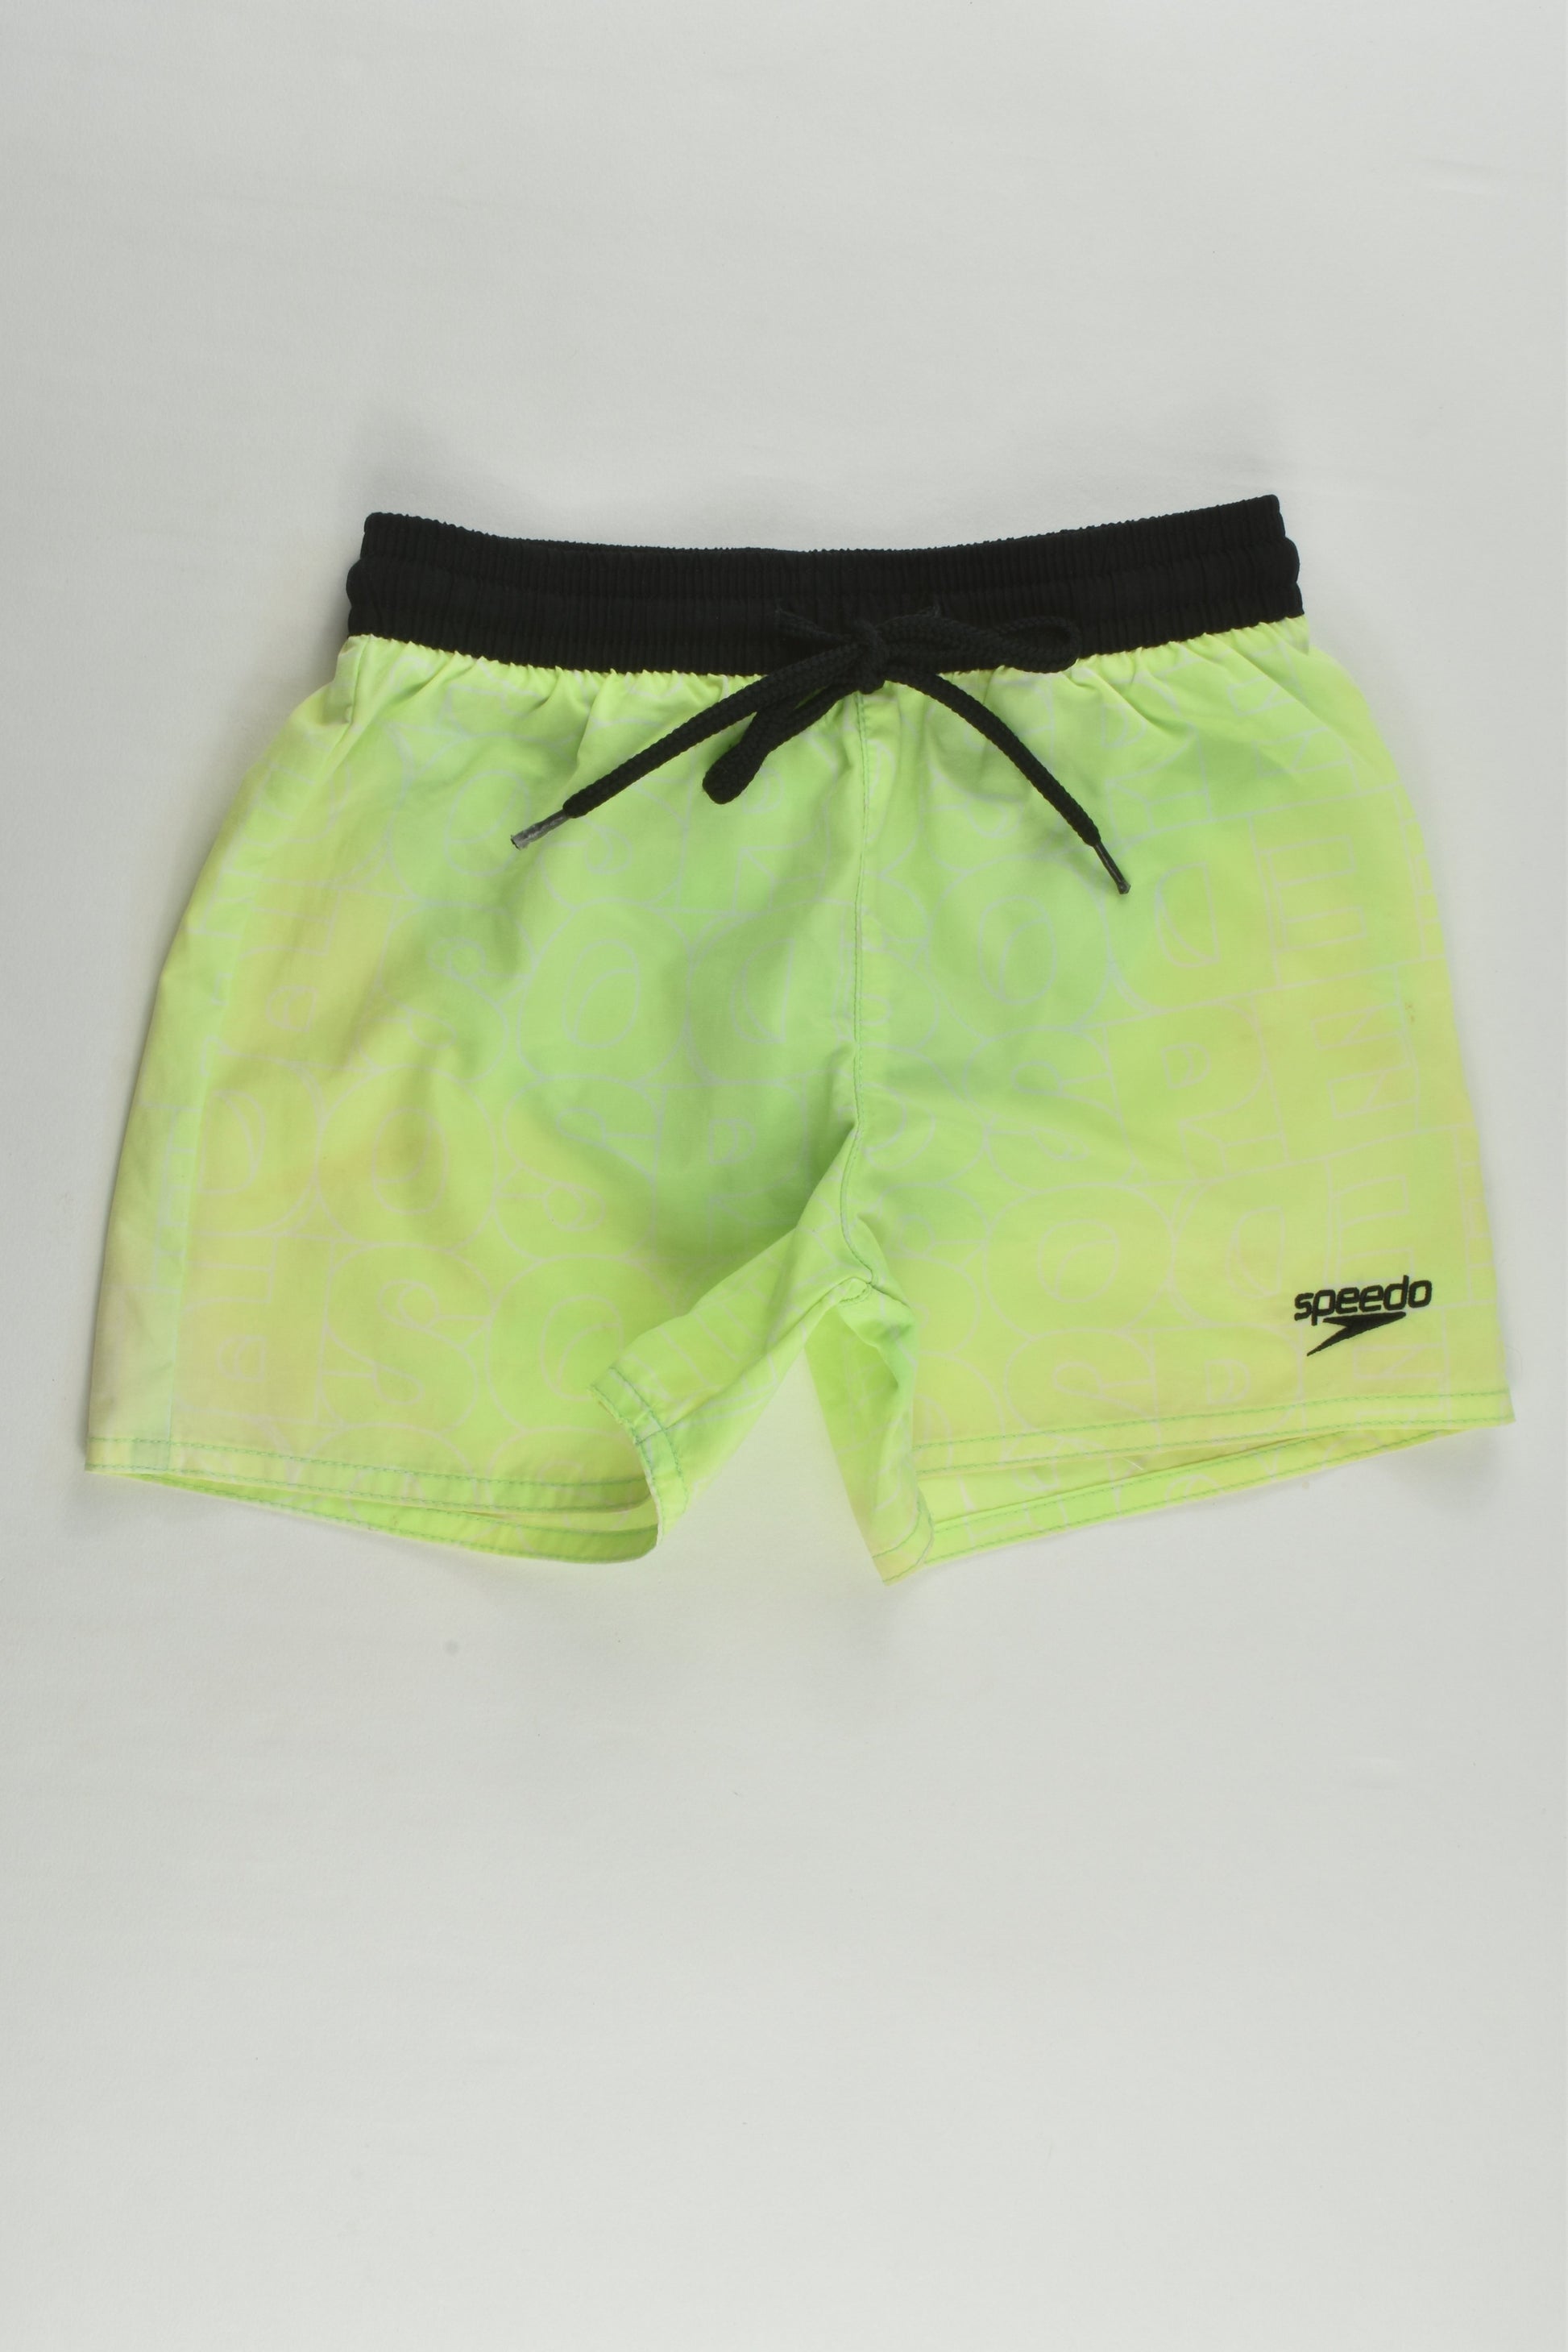 Speedo Size 3 Swim Shorts